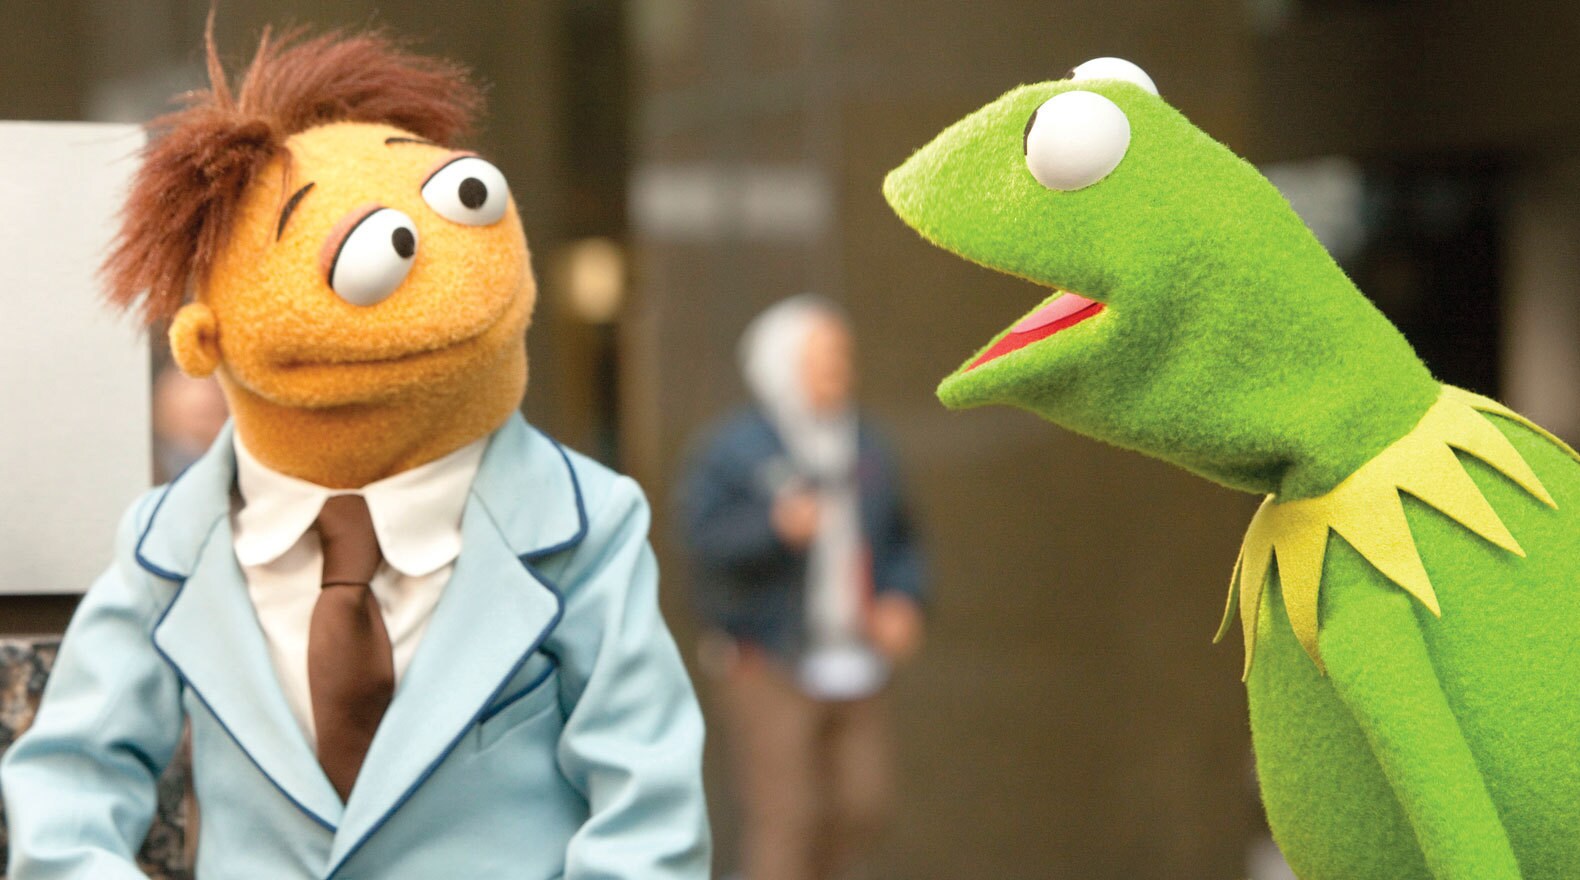 Muppet superfan Walter finally meets his idol, Kermit the Frog!